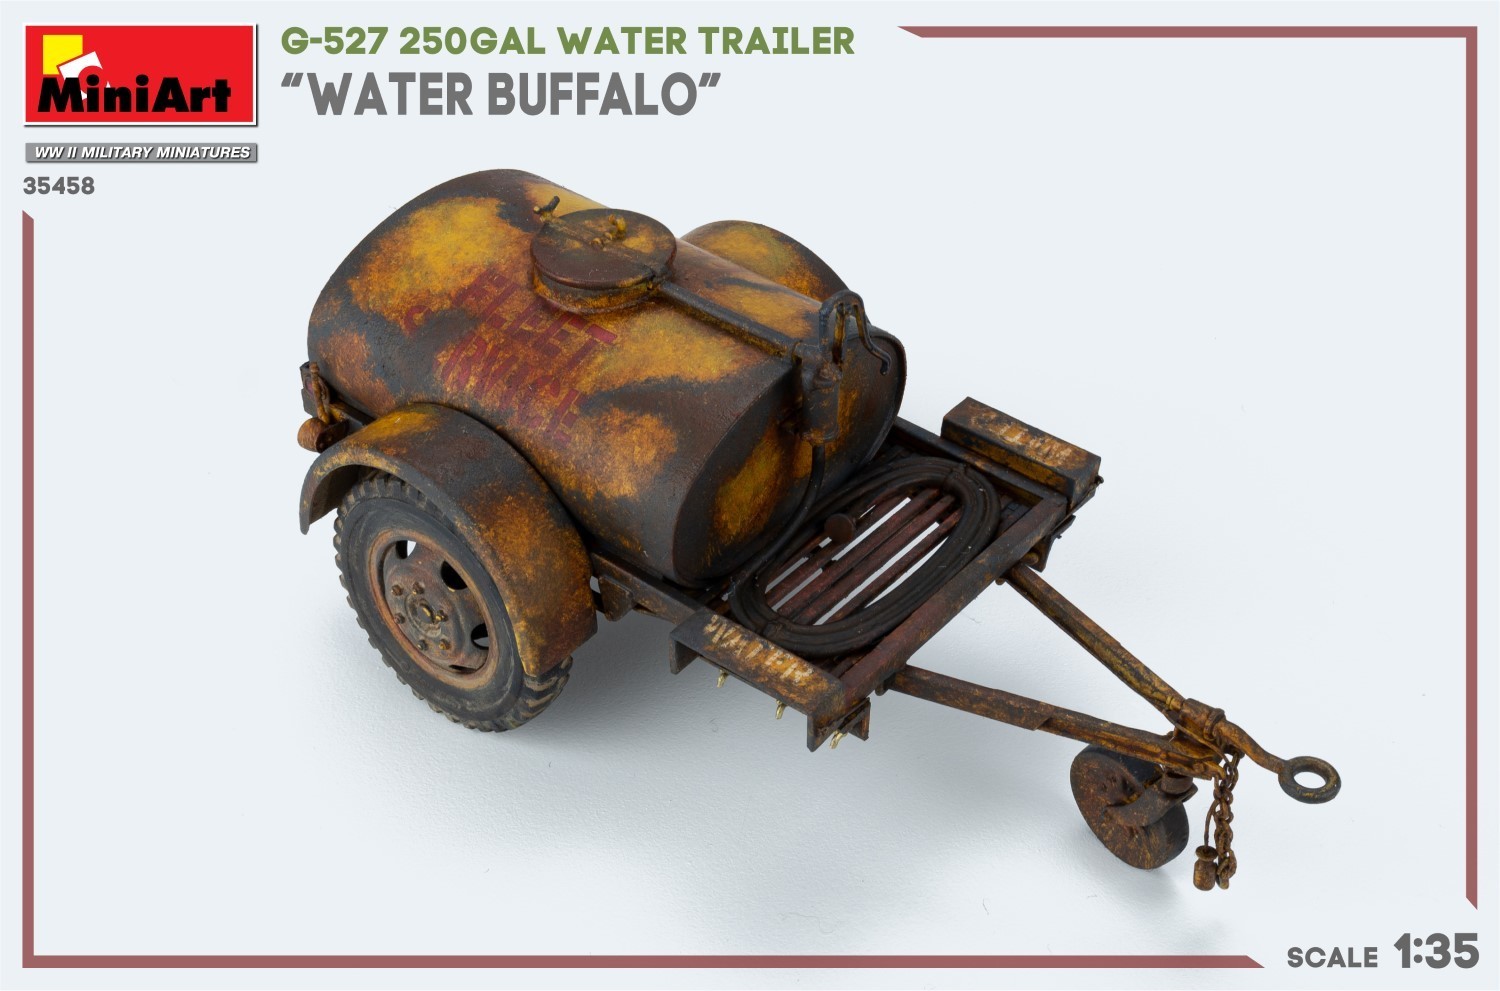 MiniArt G-527 250GAL Water Trailer “Water Buffalo” Rust Paint-5